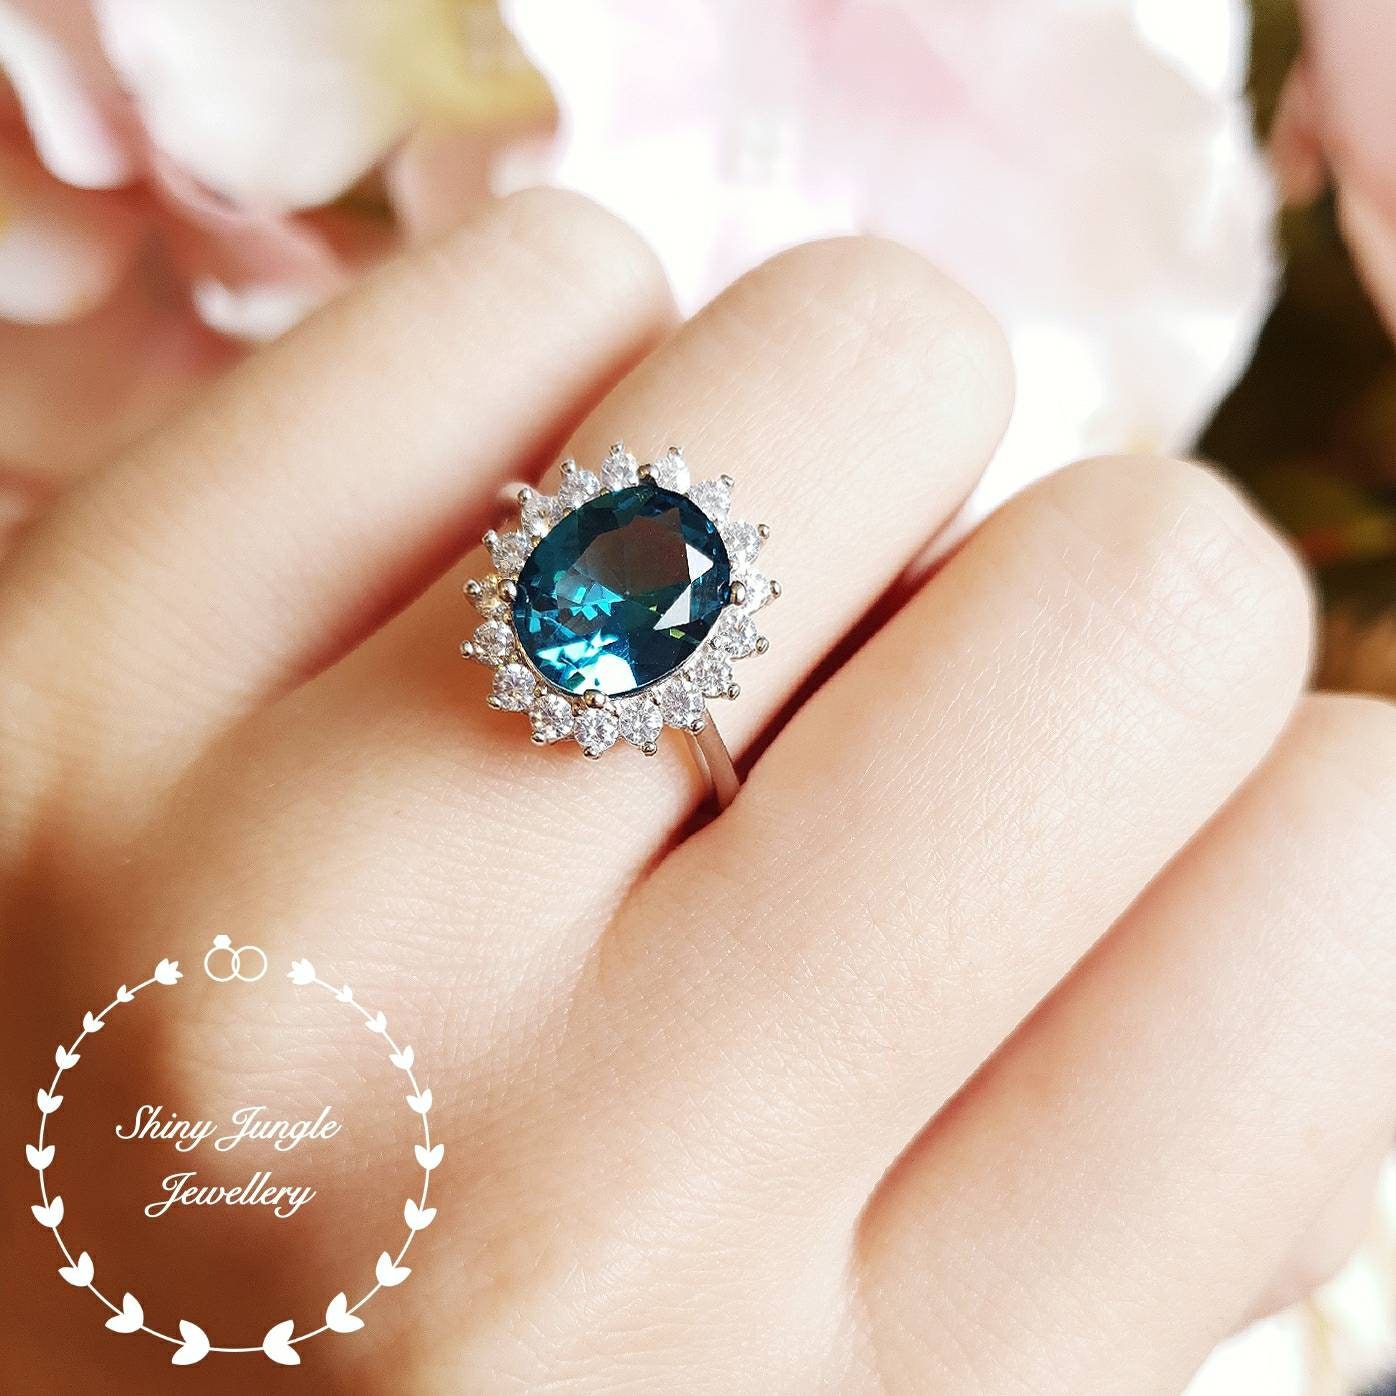 Large blue topaz statement ring for women, Blue Topaz Diamond RIng – Lilo  Diamonds